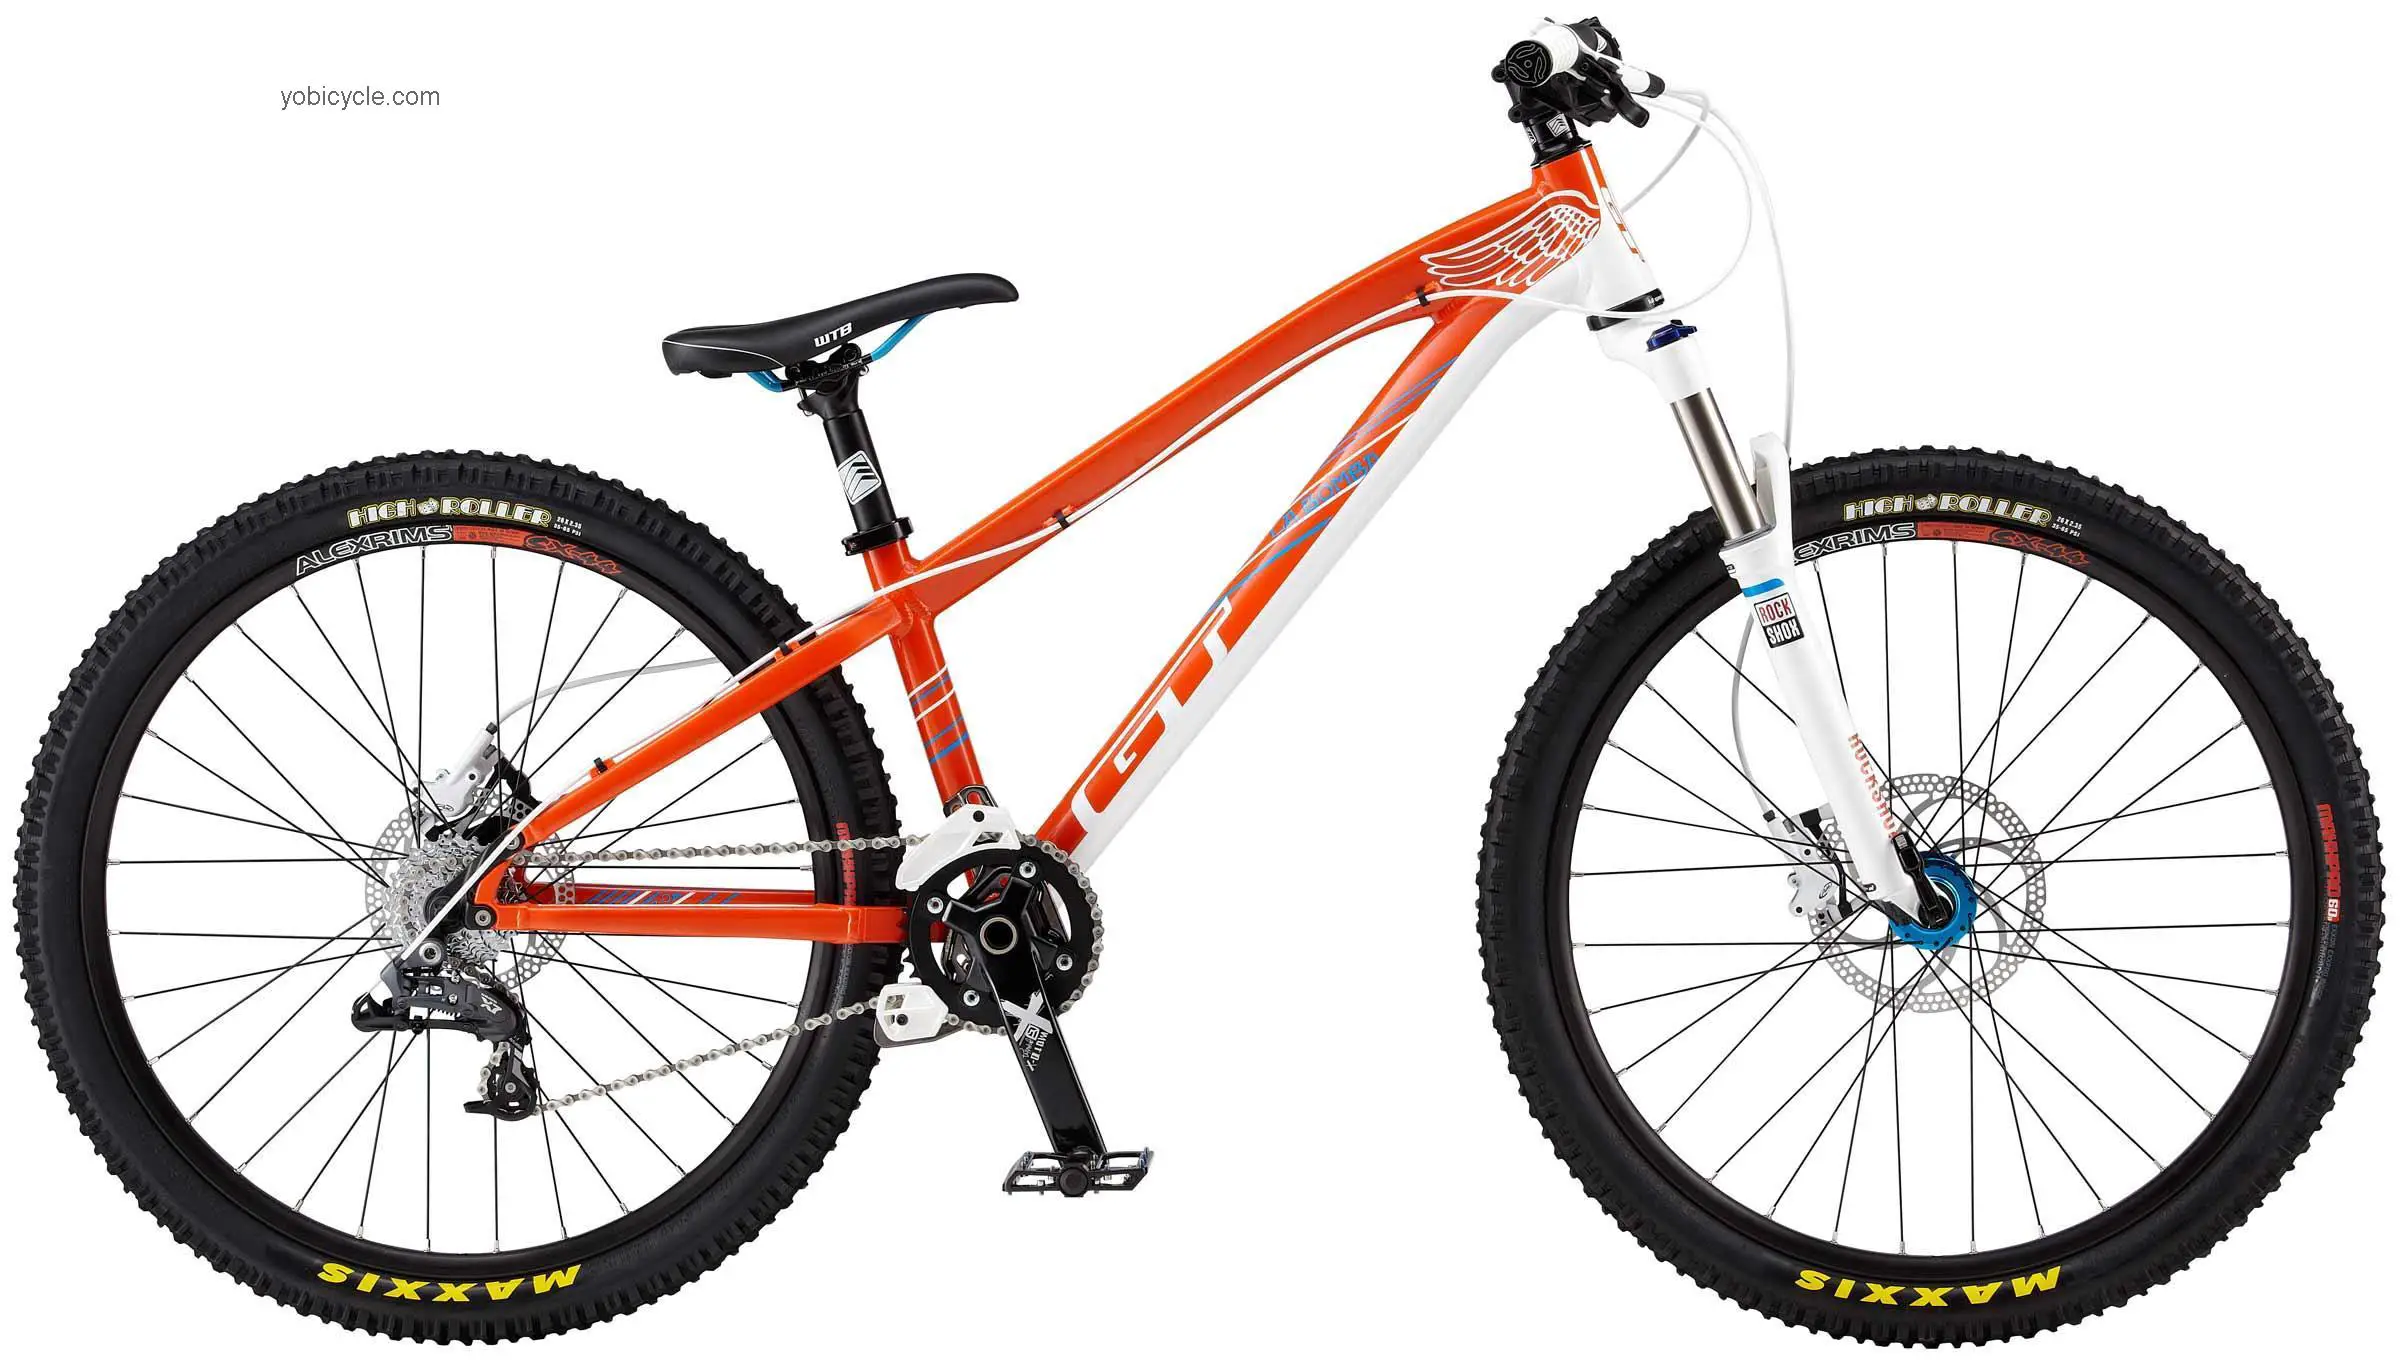 GT Bicycles La Bomba 2.0 2013 comparison online with competitors